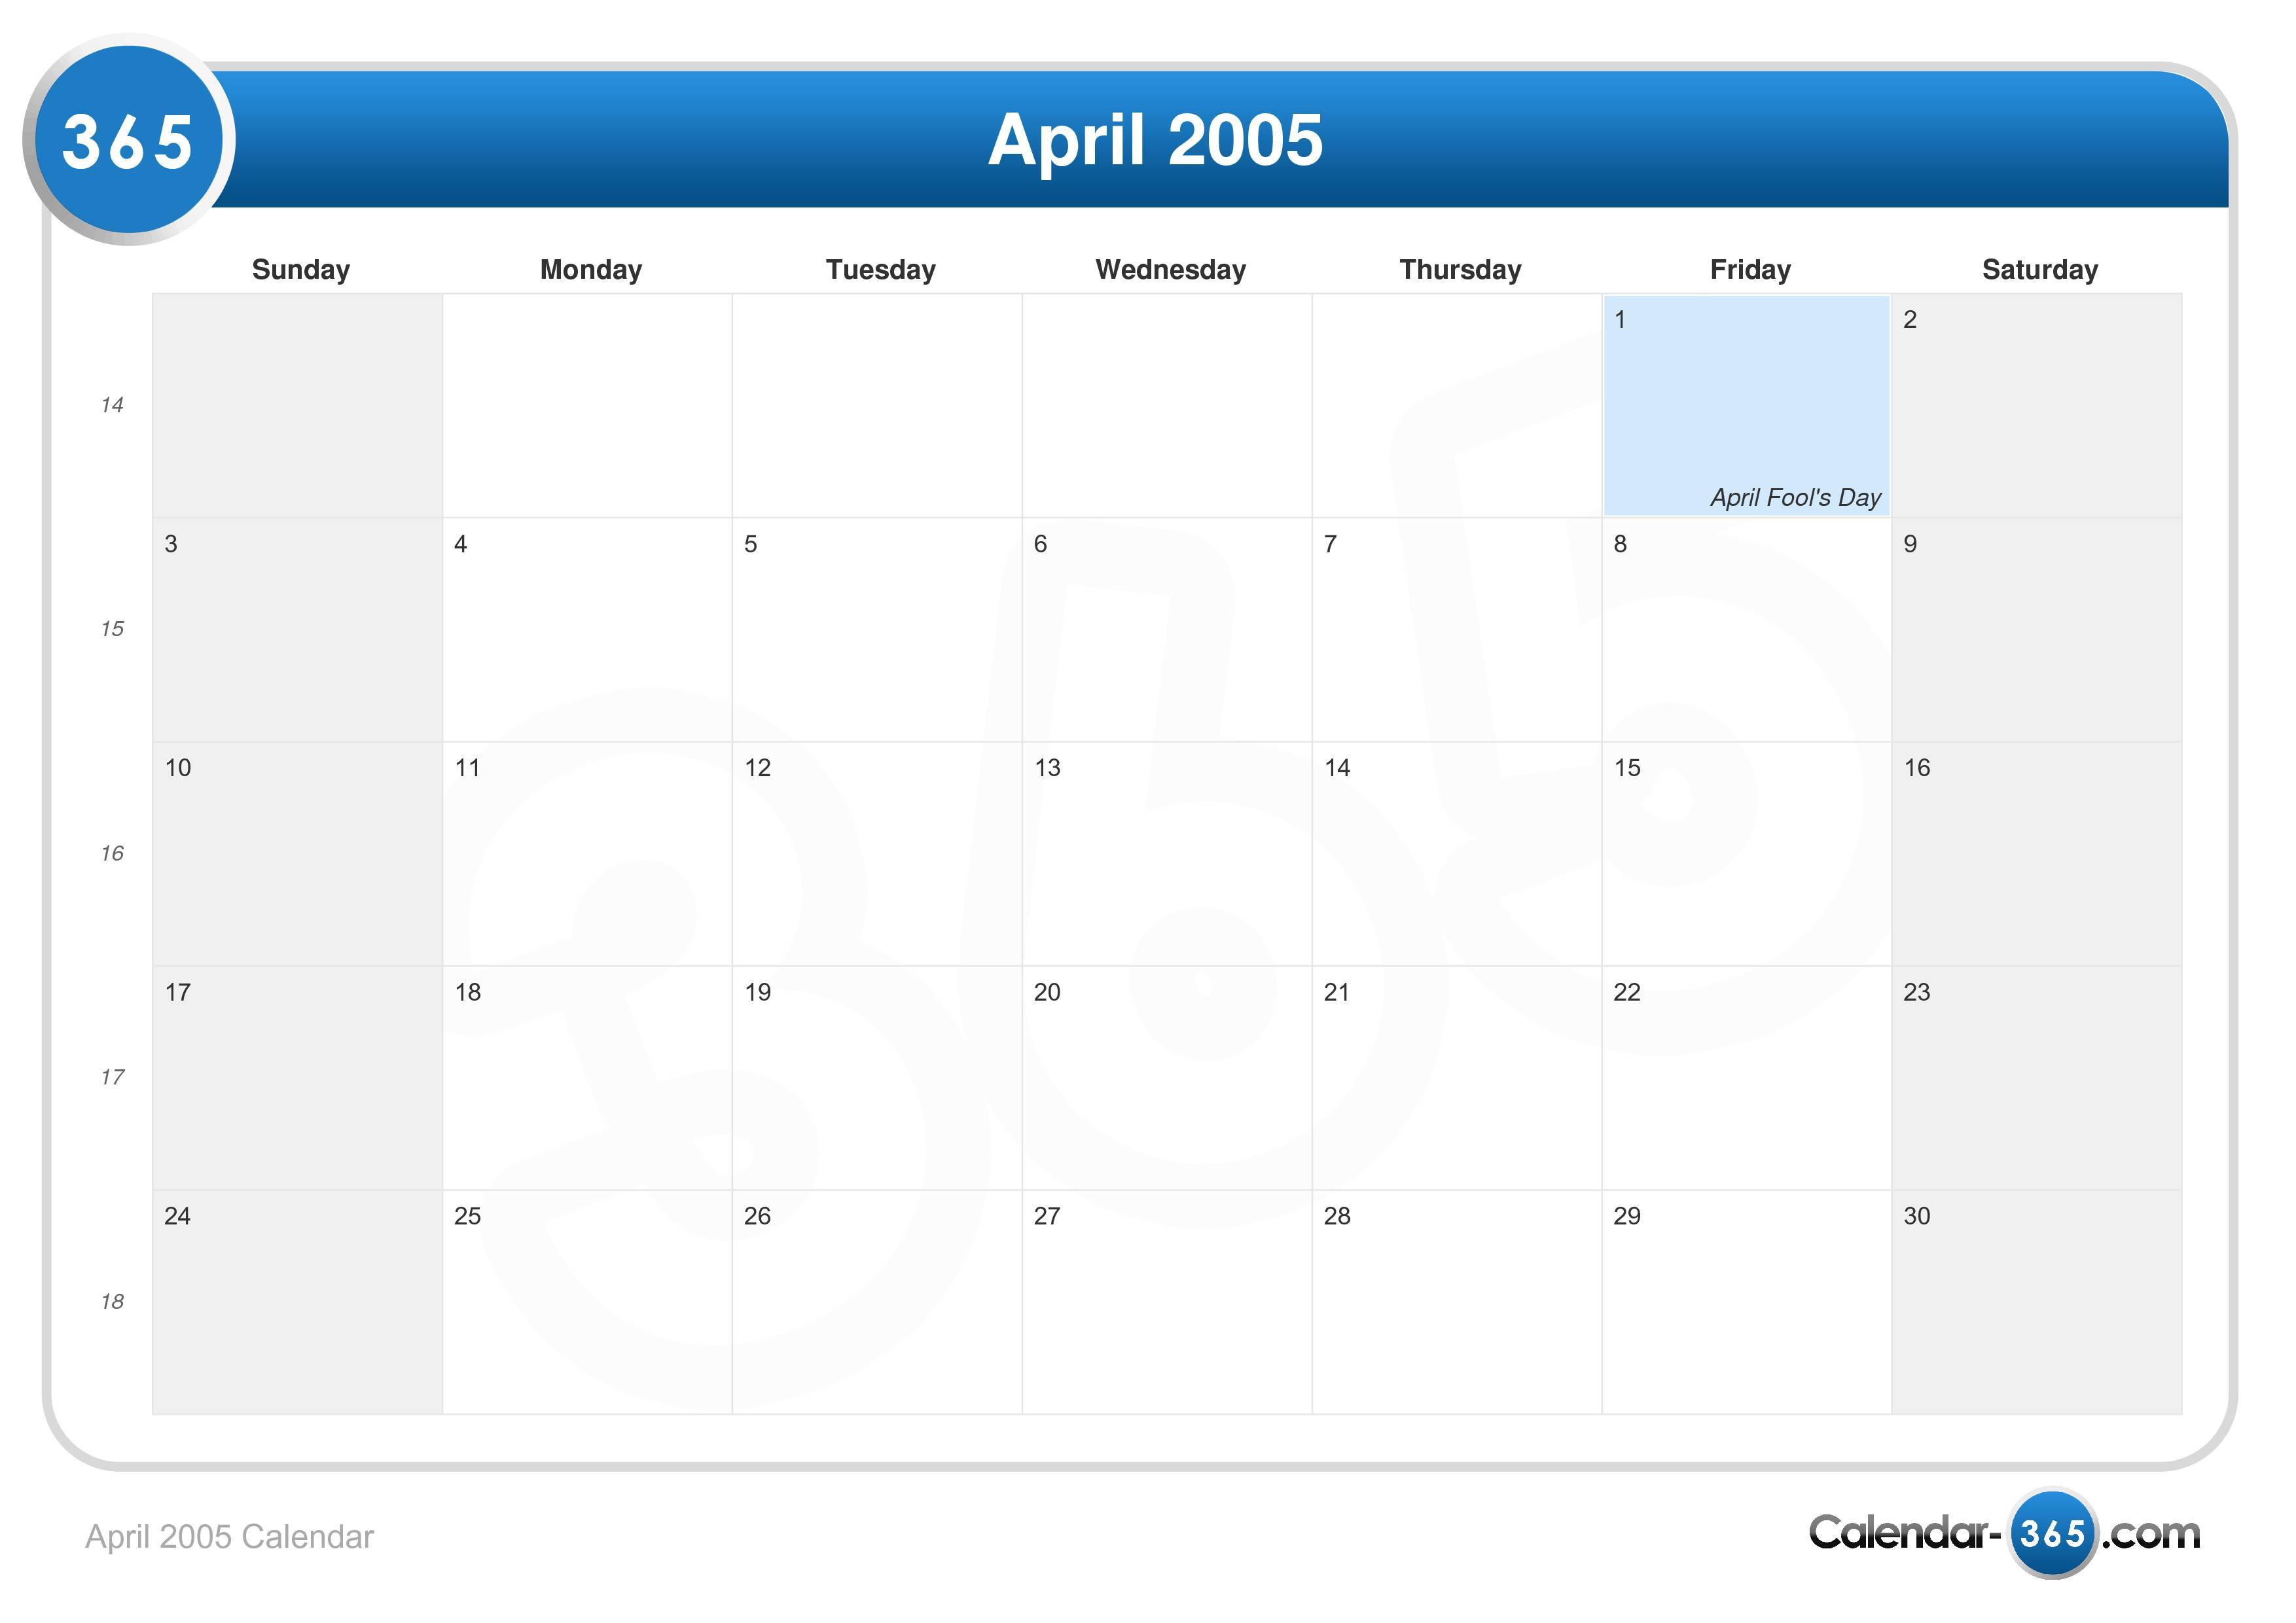 April 2005 Calendar